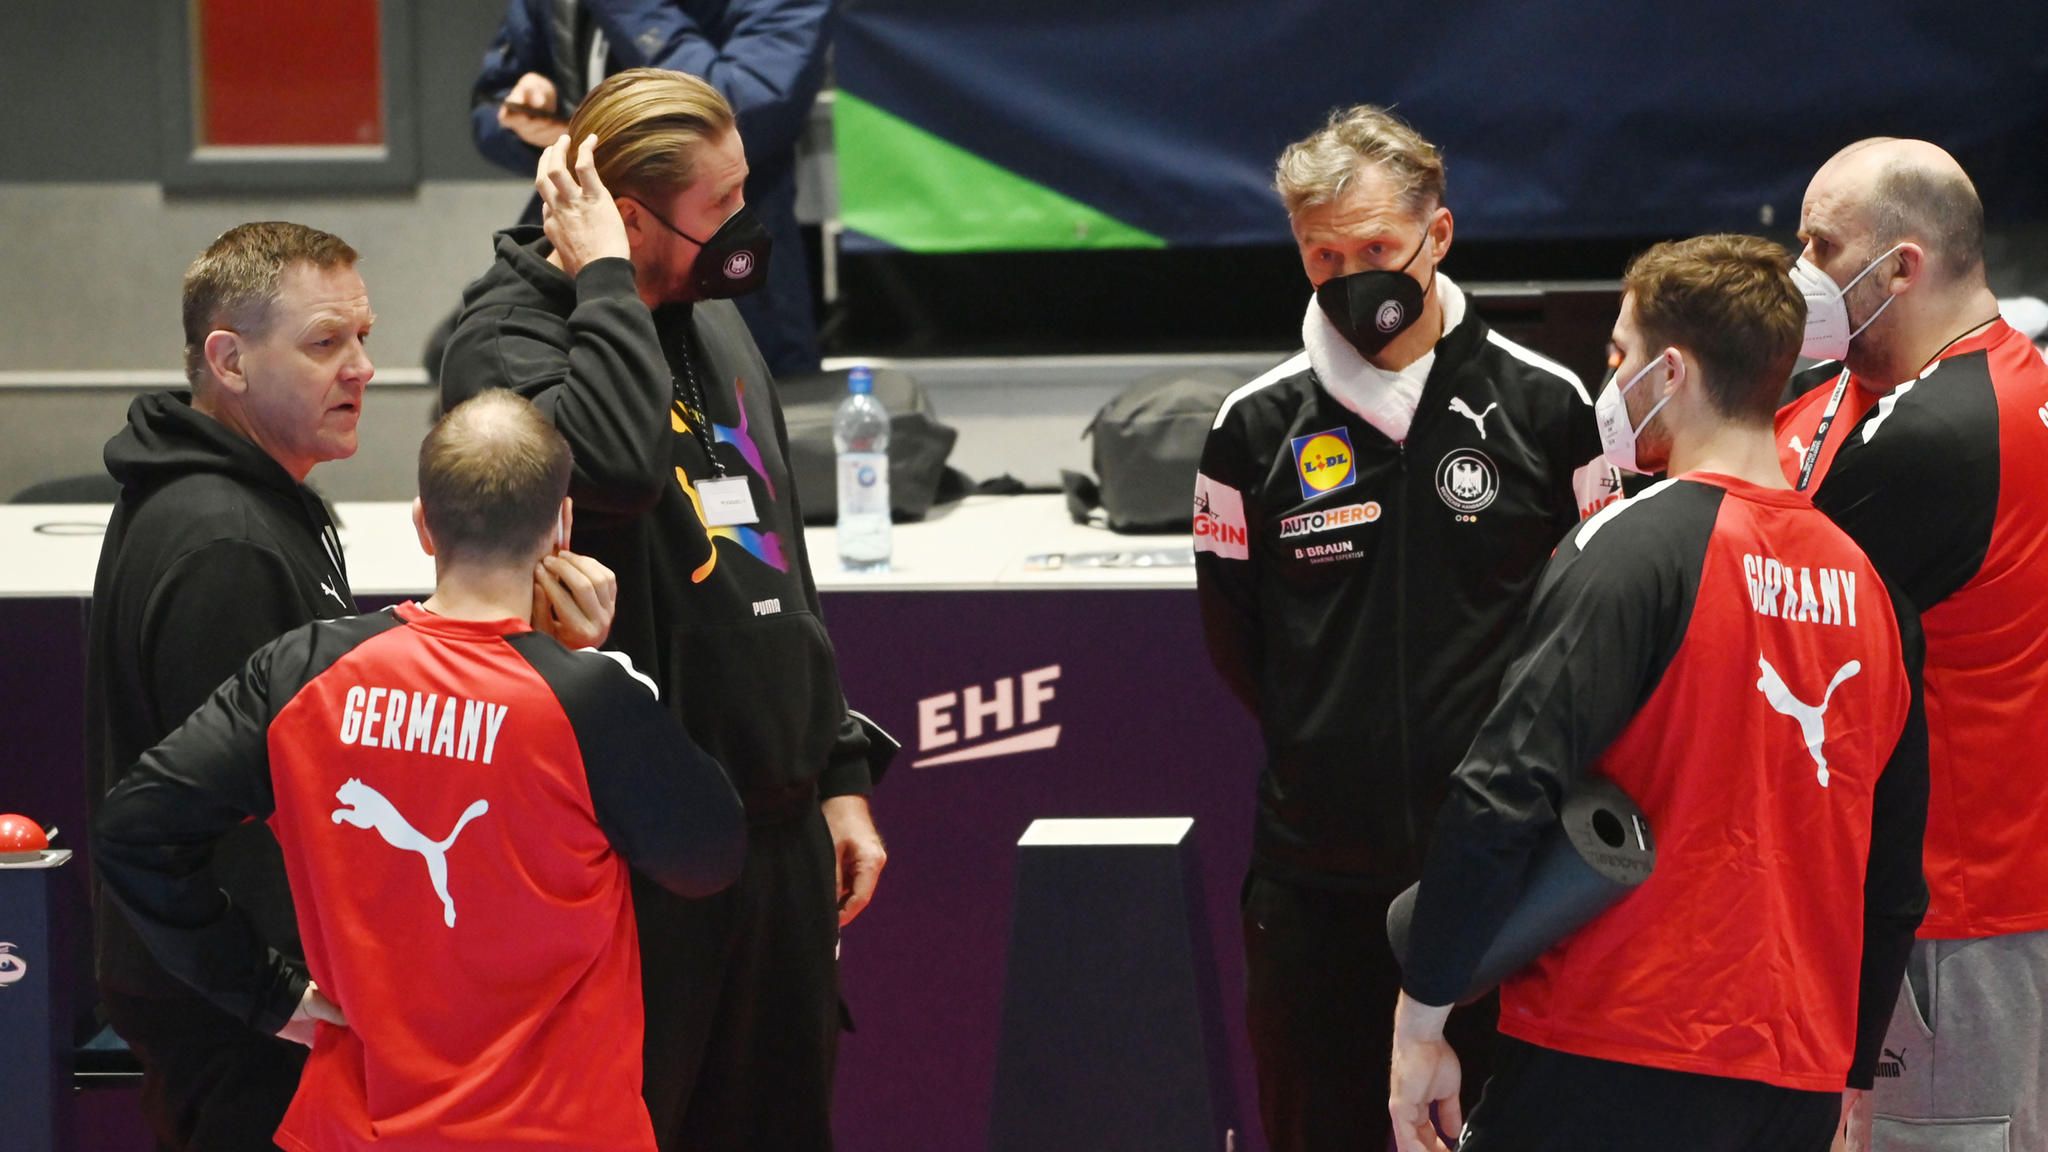 Handball-EM Deutsche Mannschaft spielt trotz Corona weiter STERN.de